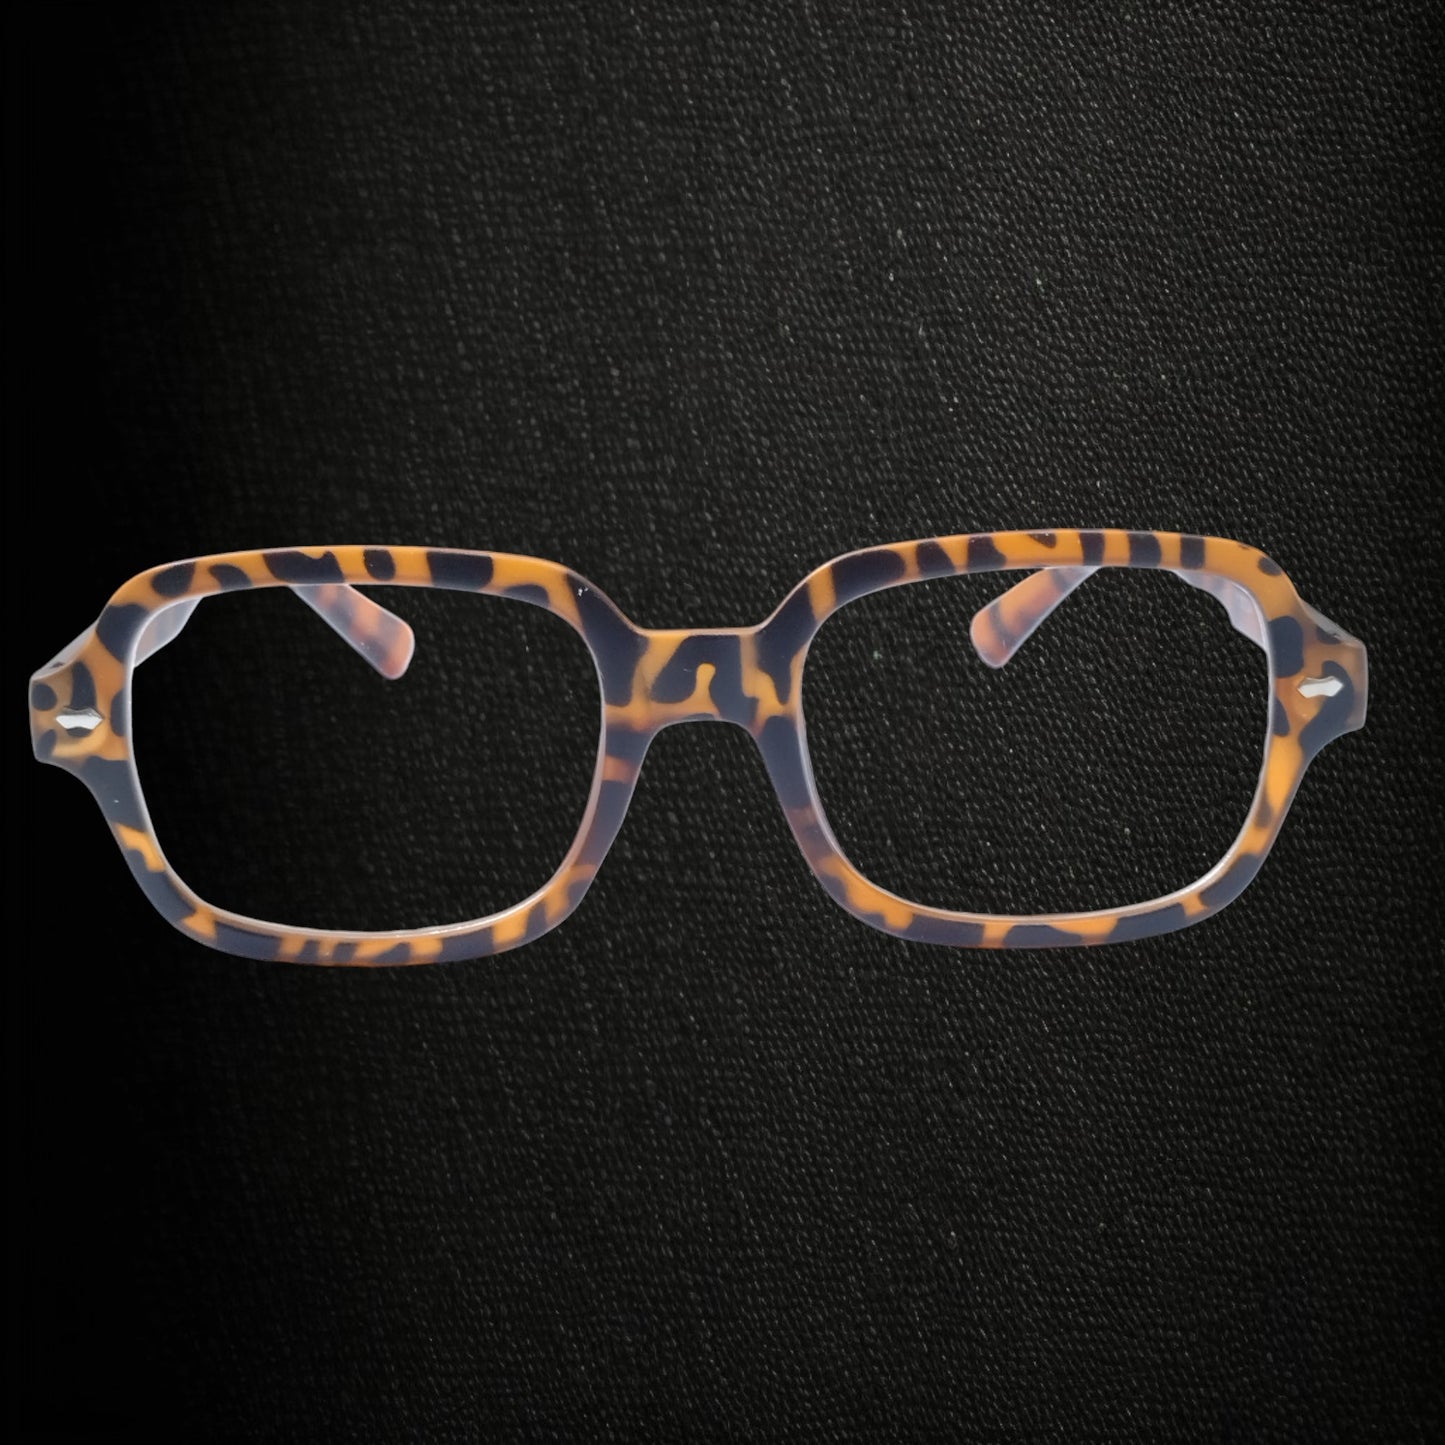 Vintage Hexagonal Glasses